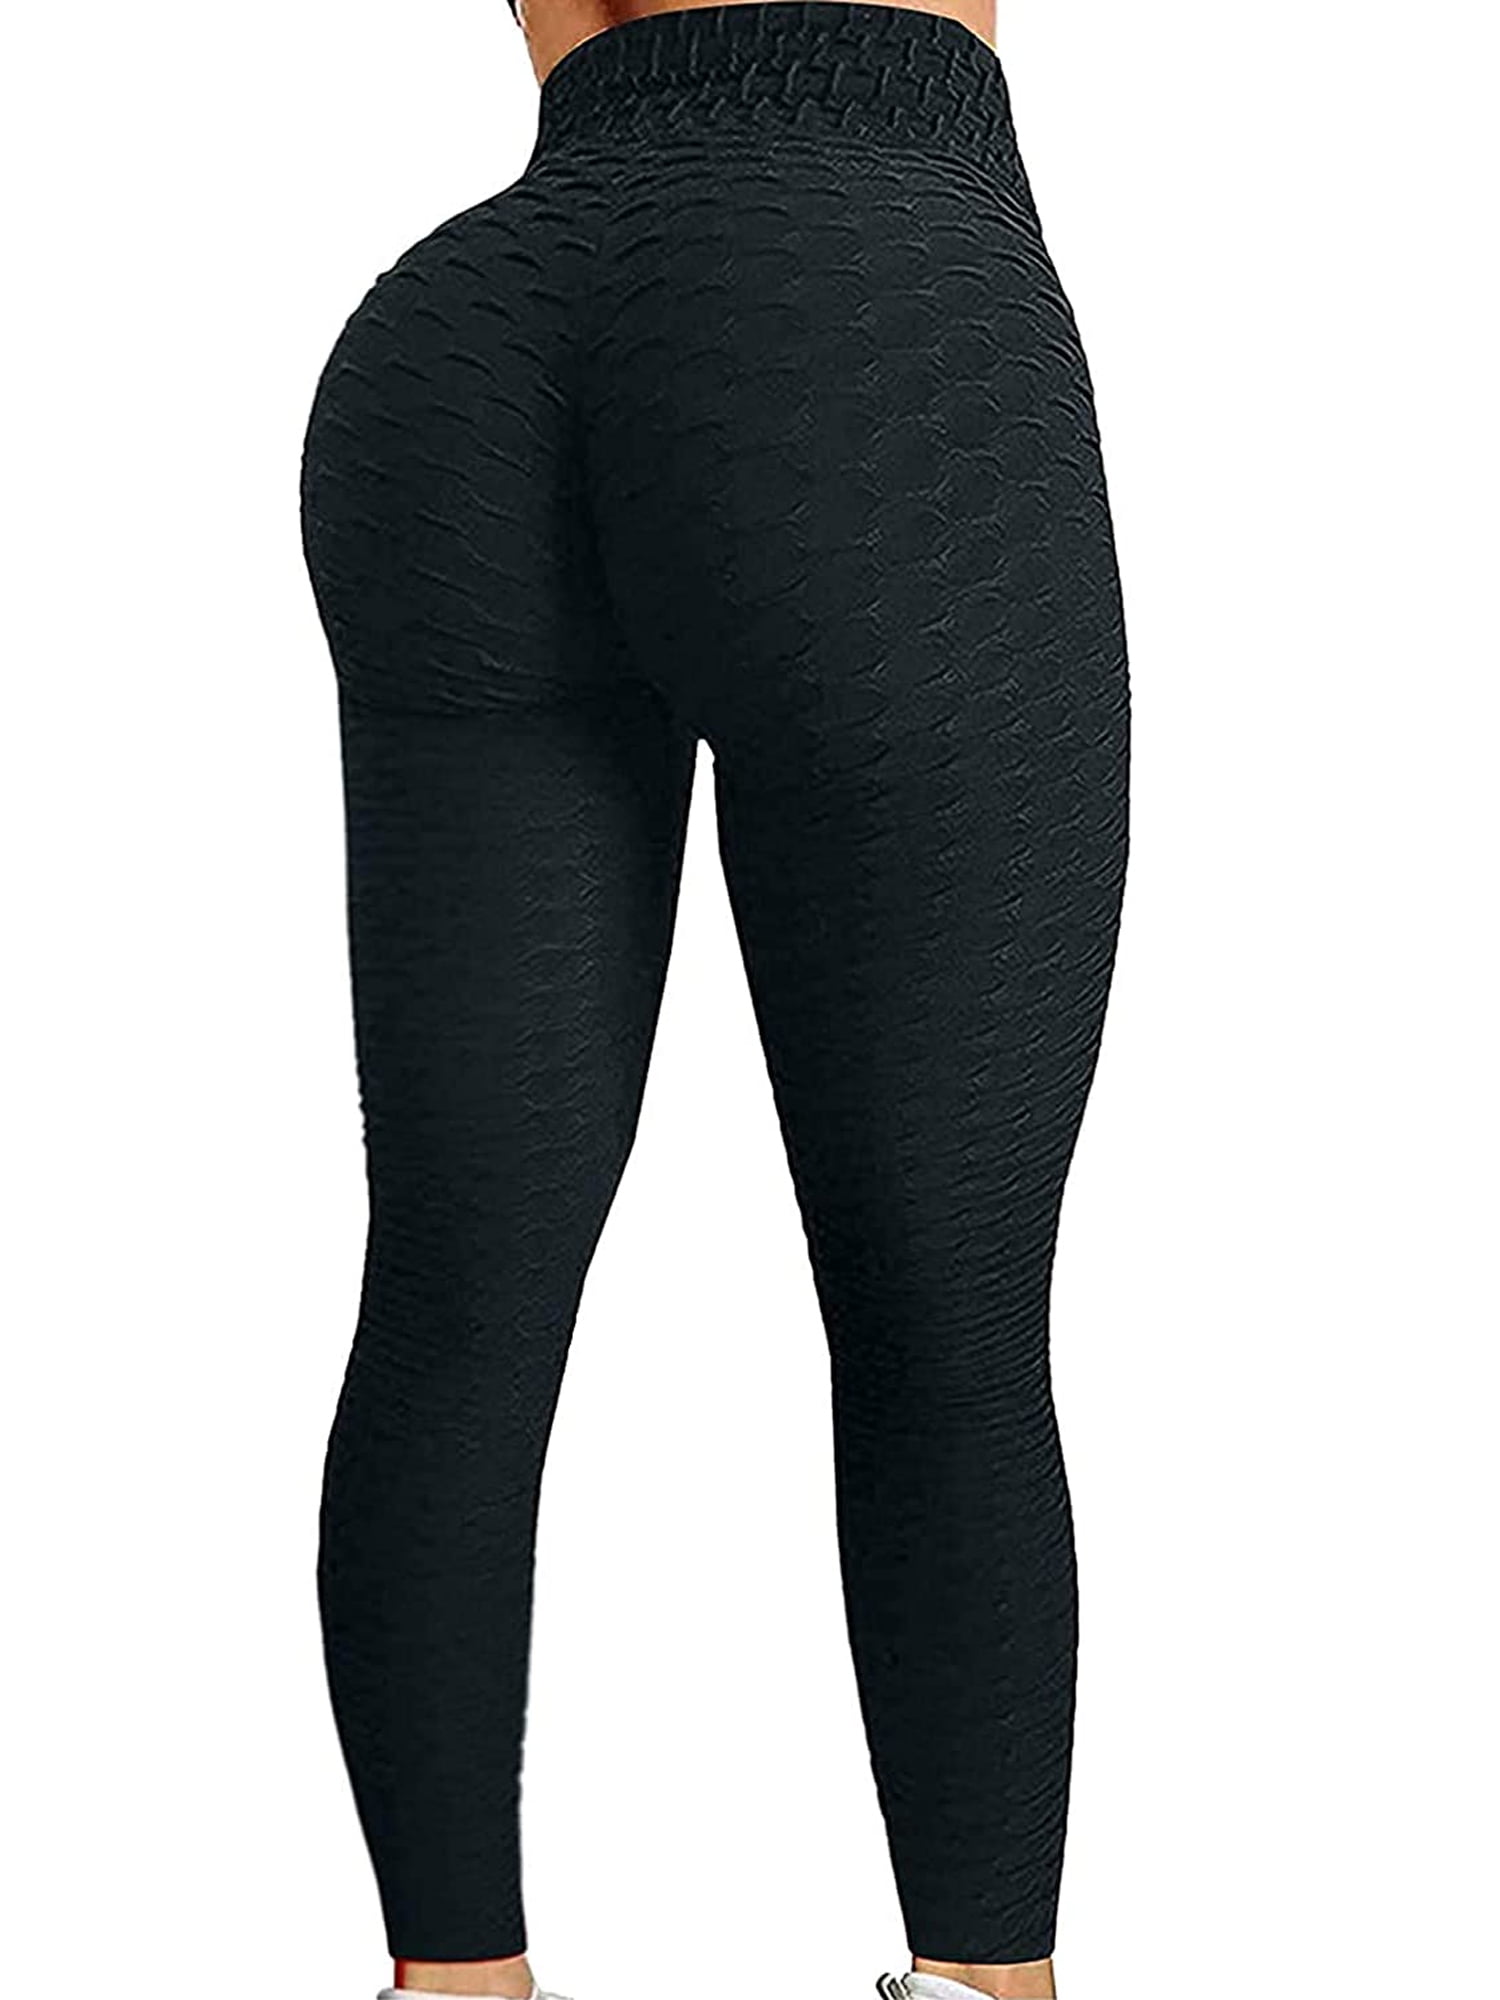 Elastic Women Yoga Gym Anti-Cellulite Sport Leggings Butt Lift Pants Trousers 